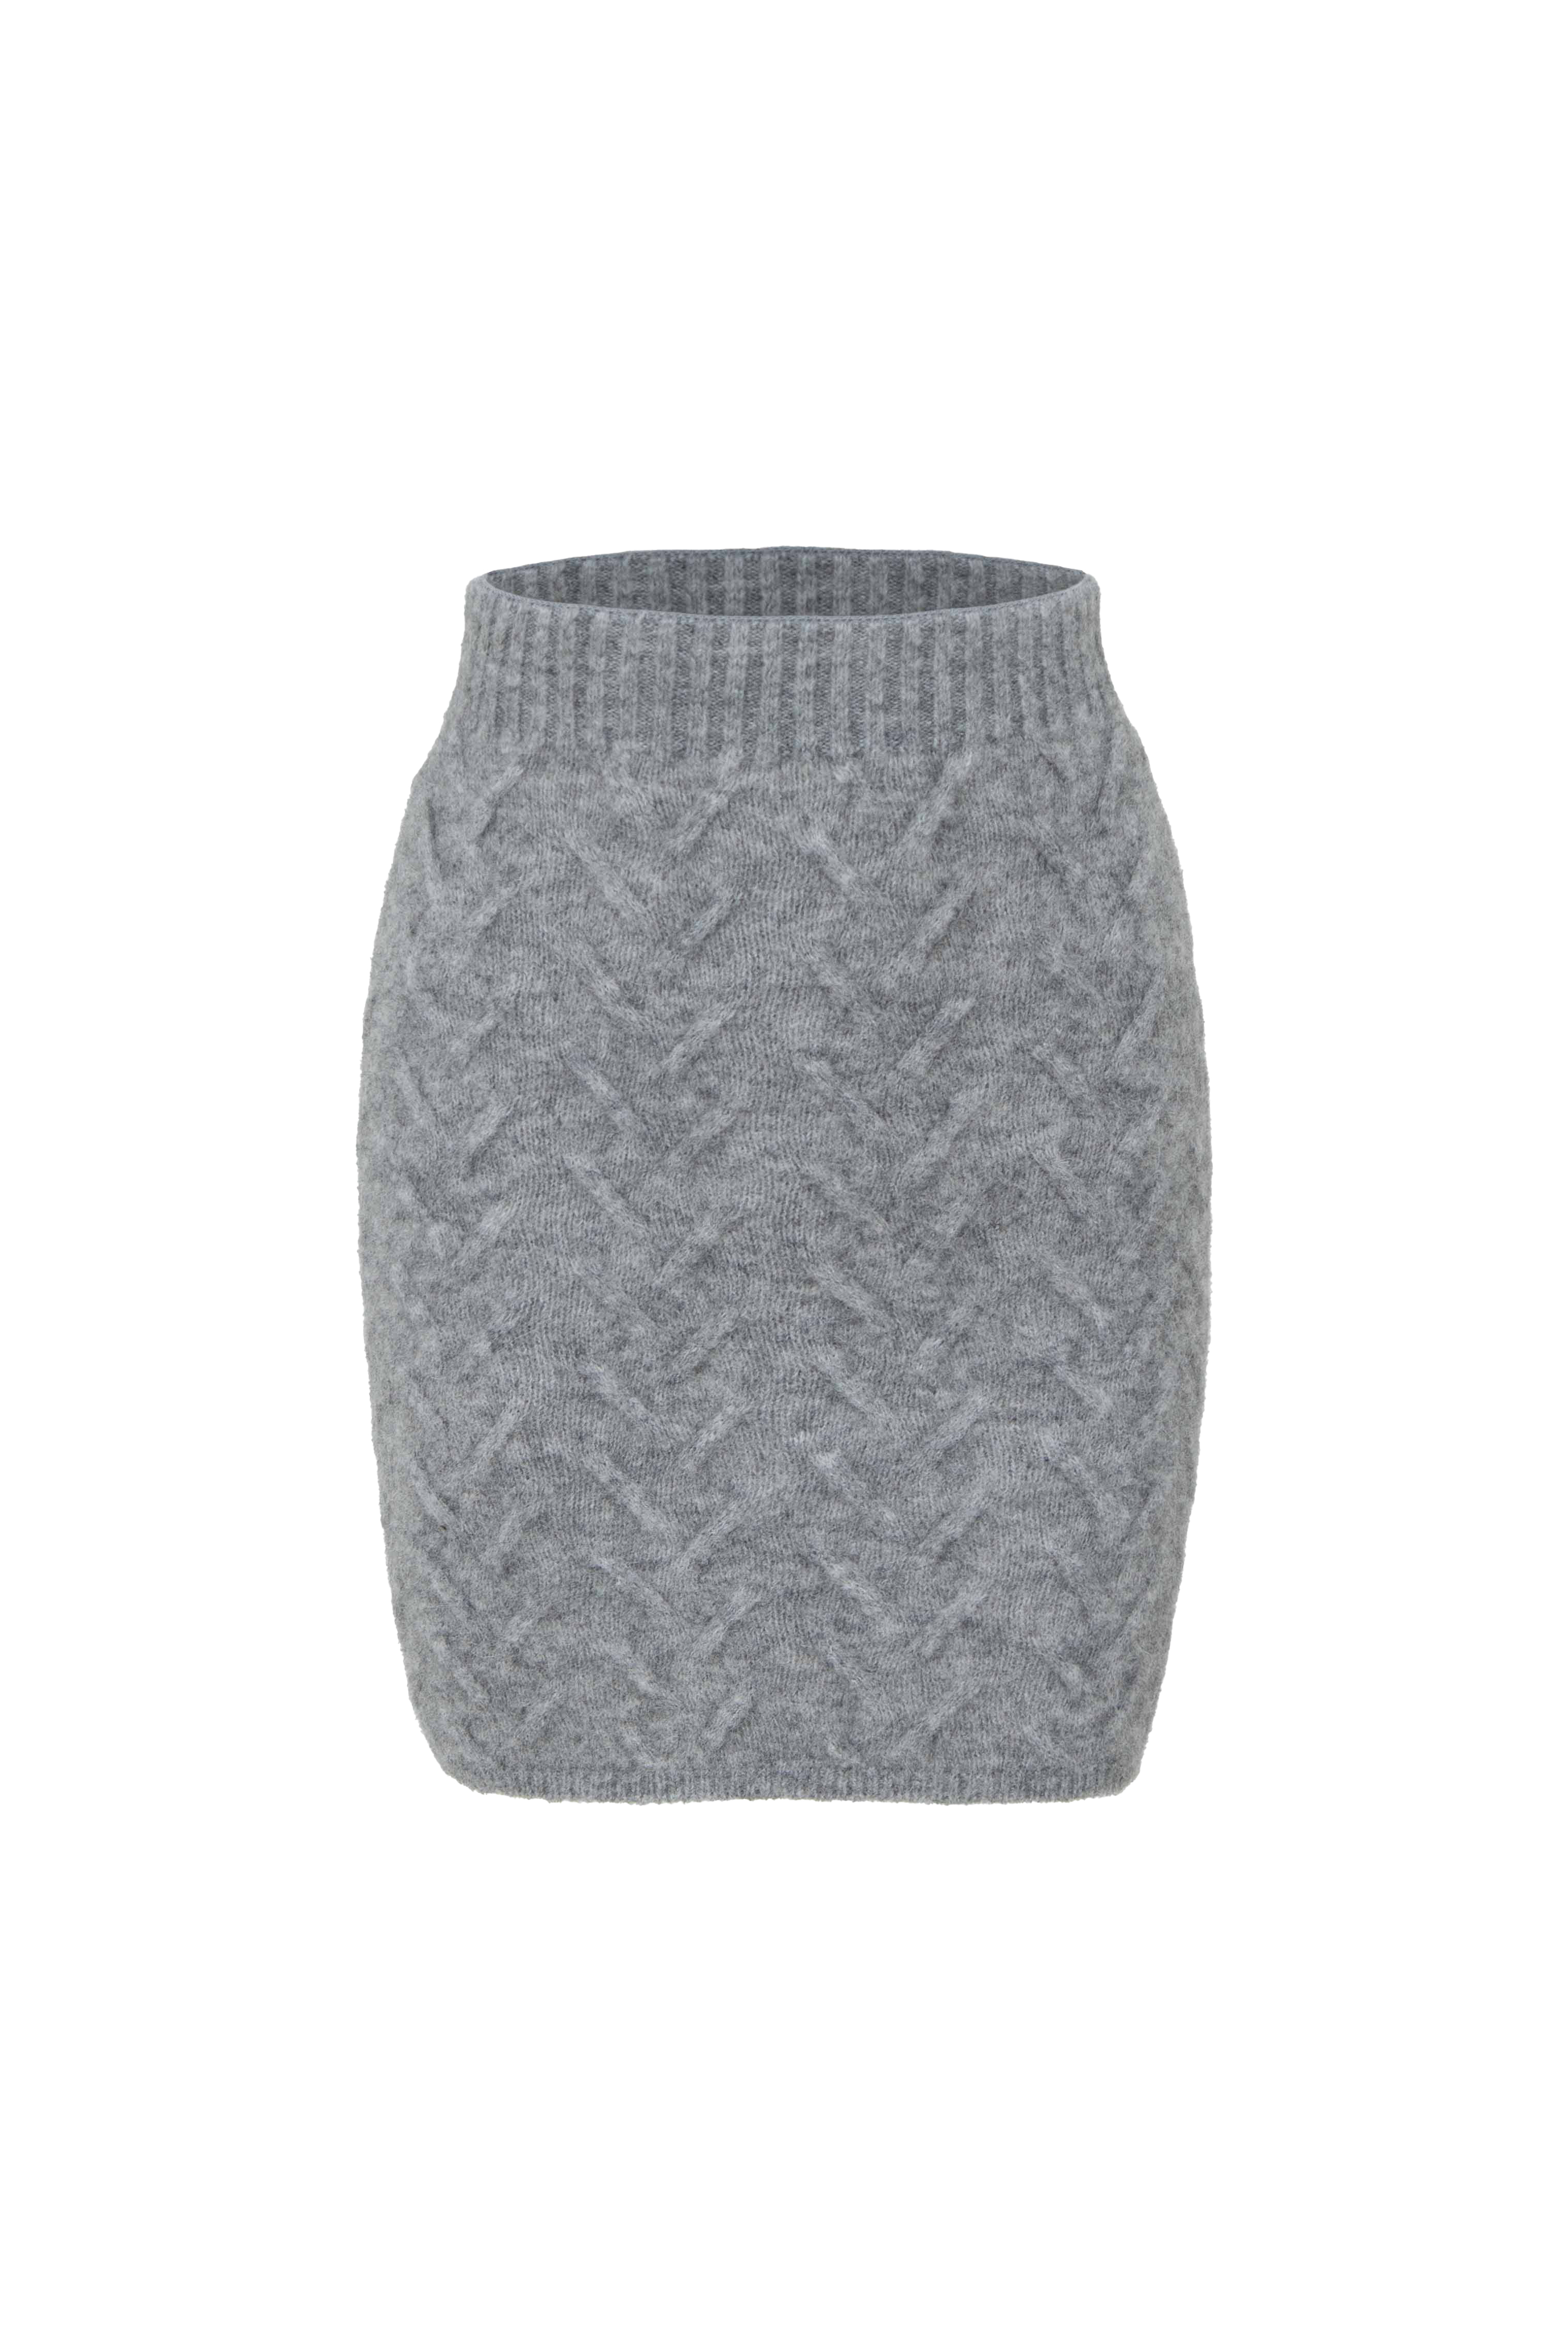 Skirt 4492-04 Grey from BRUSNiKA